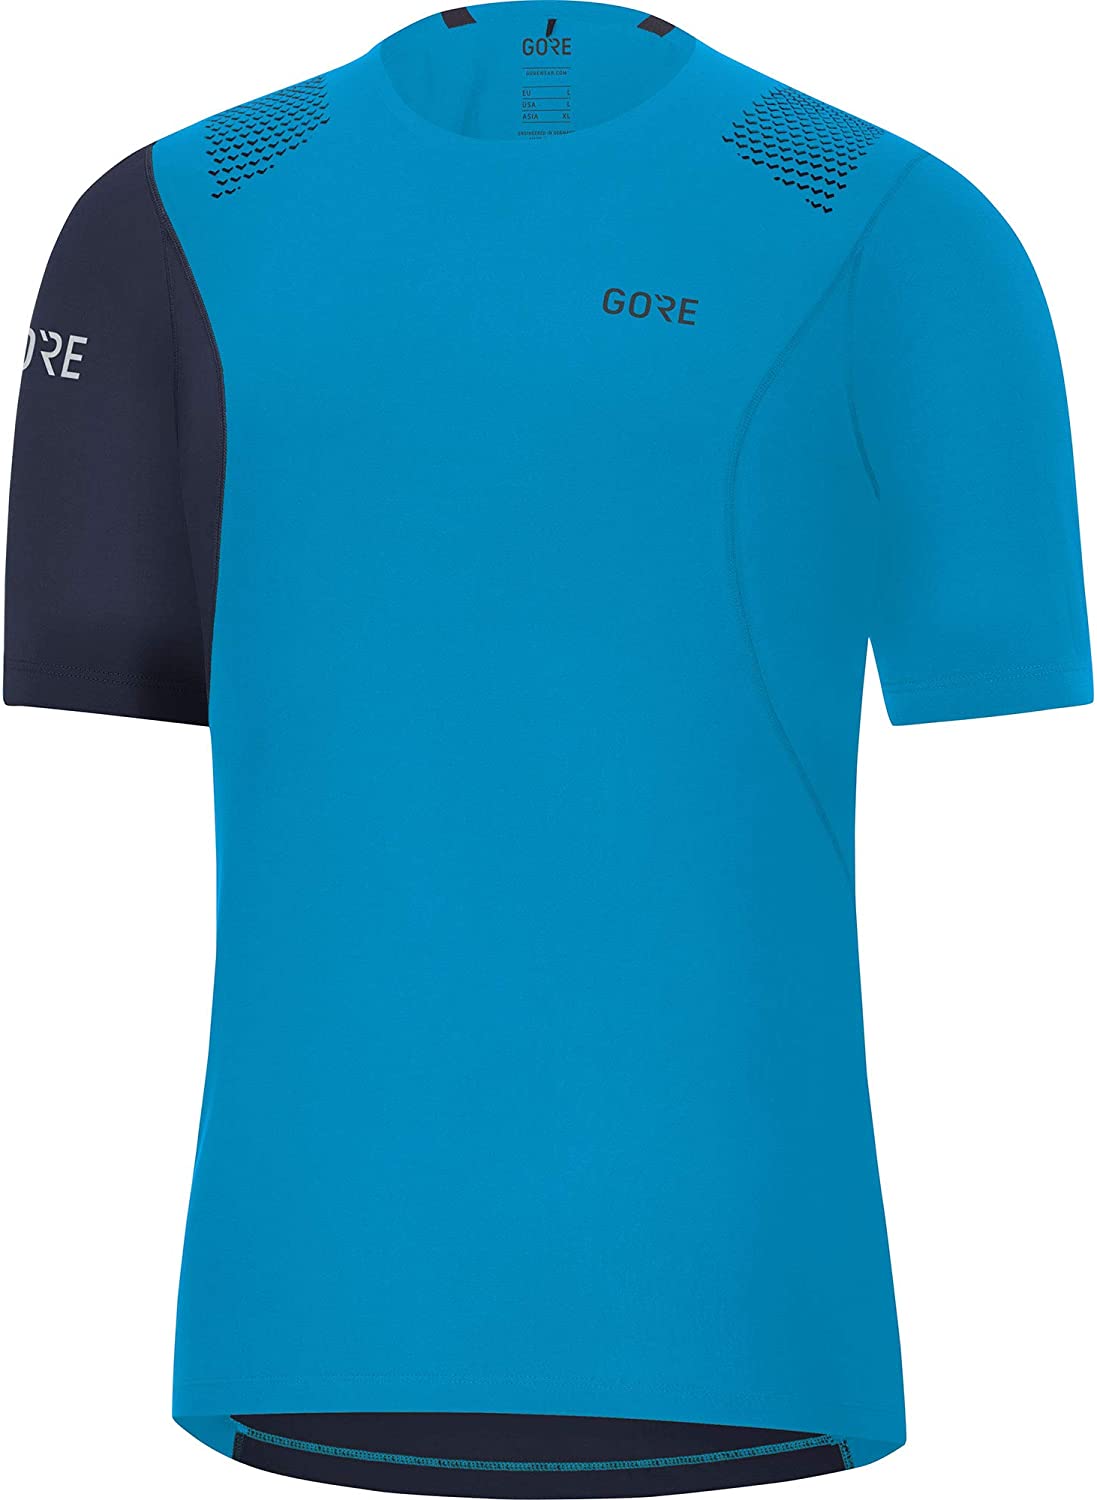 Gore Wear - R7 Shirt - Camiseta - Hombre